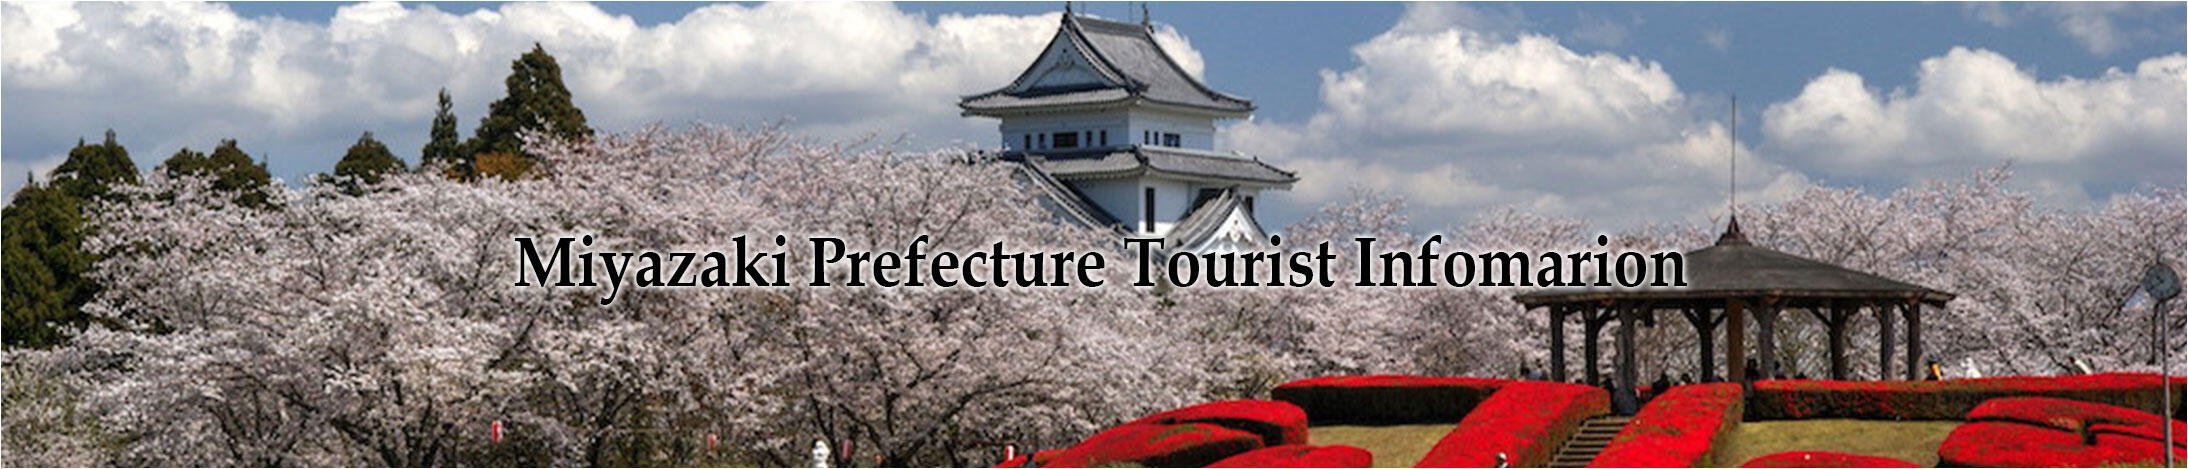 Miyazaki Prefecture Tourist Infomarion